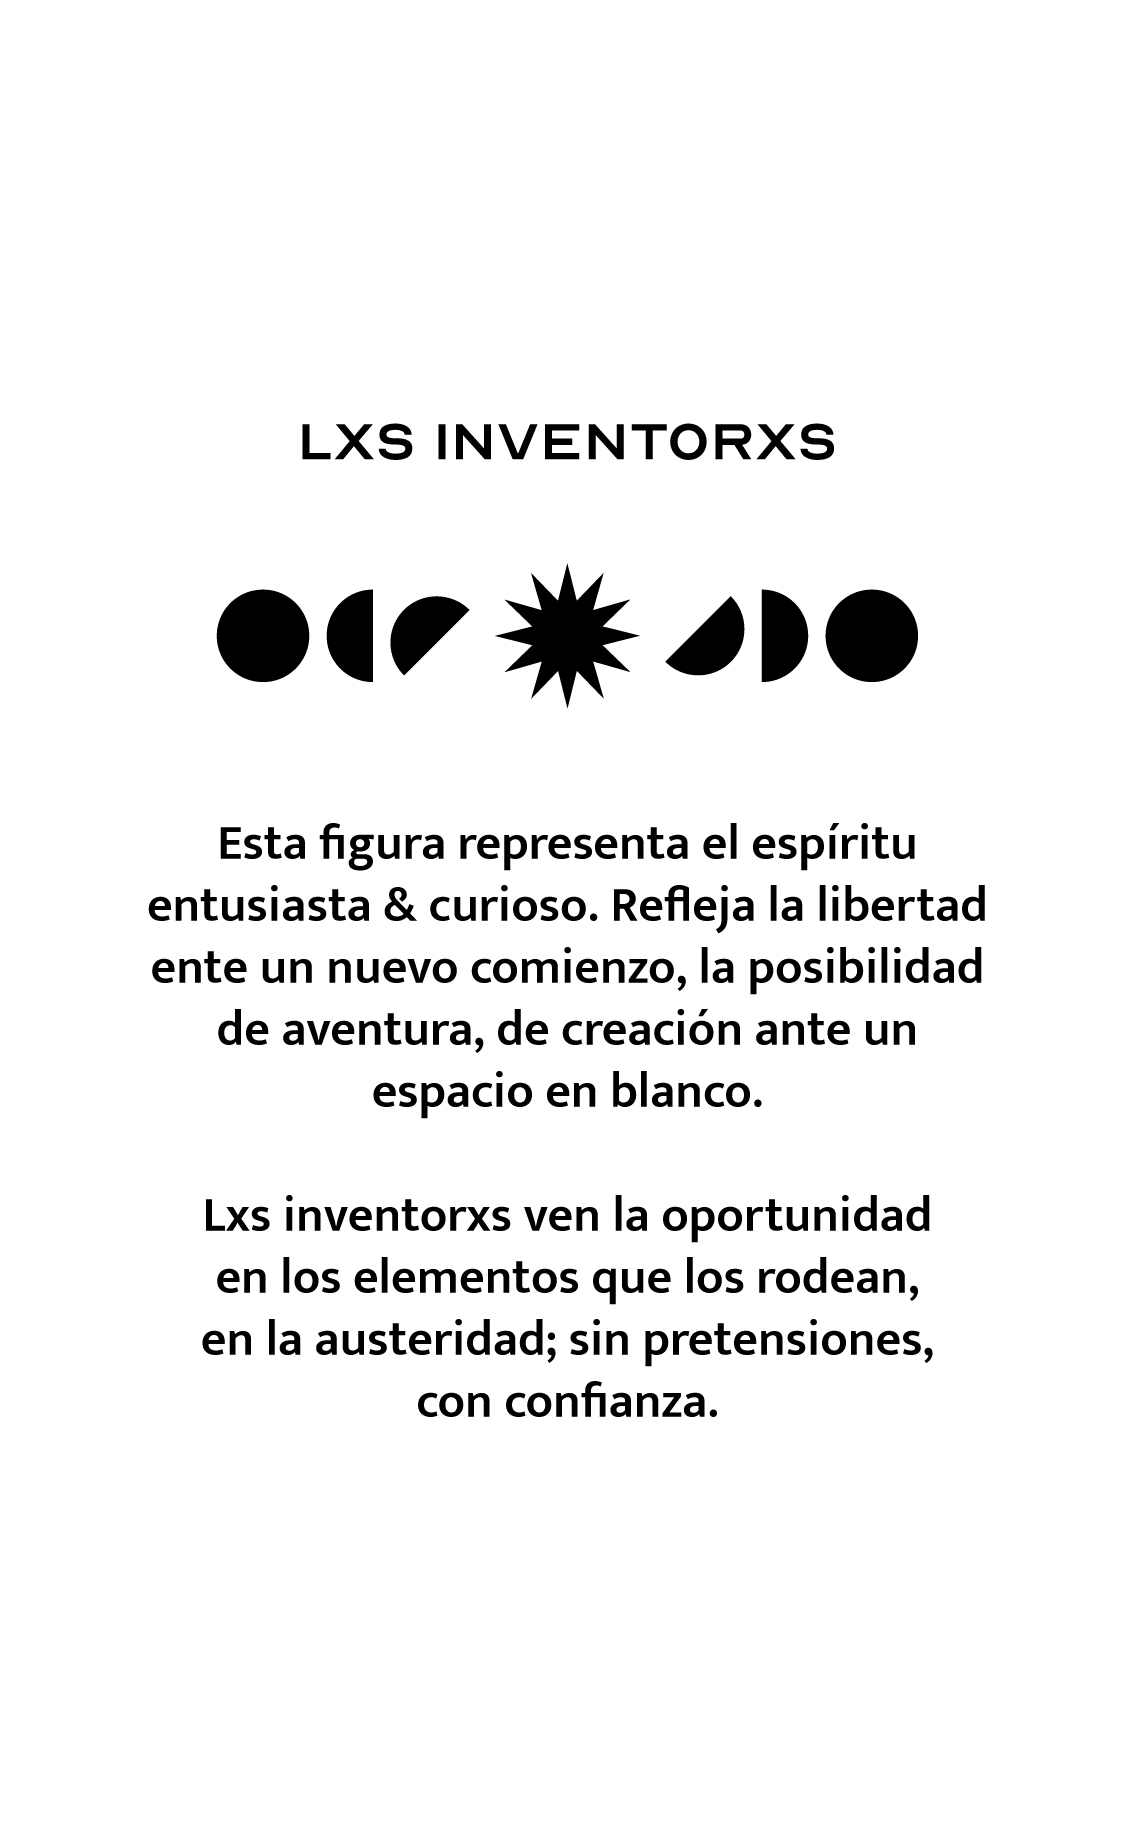 ula_Lxs-Inventorxs_Dorso-2